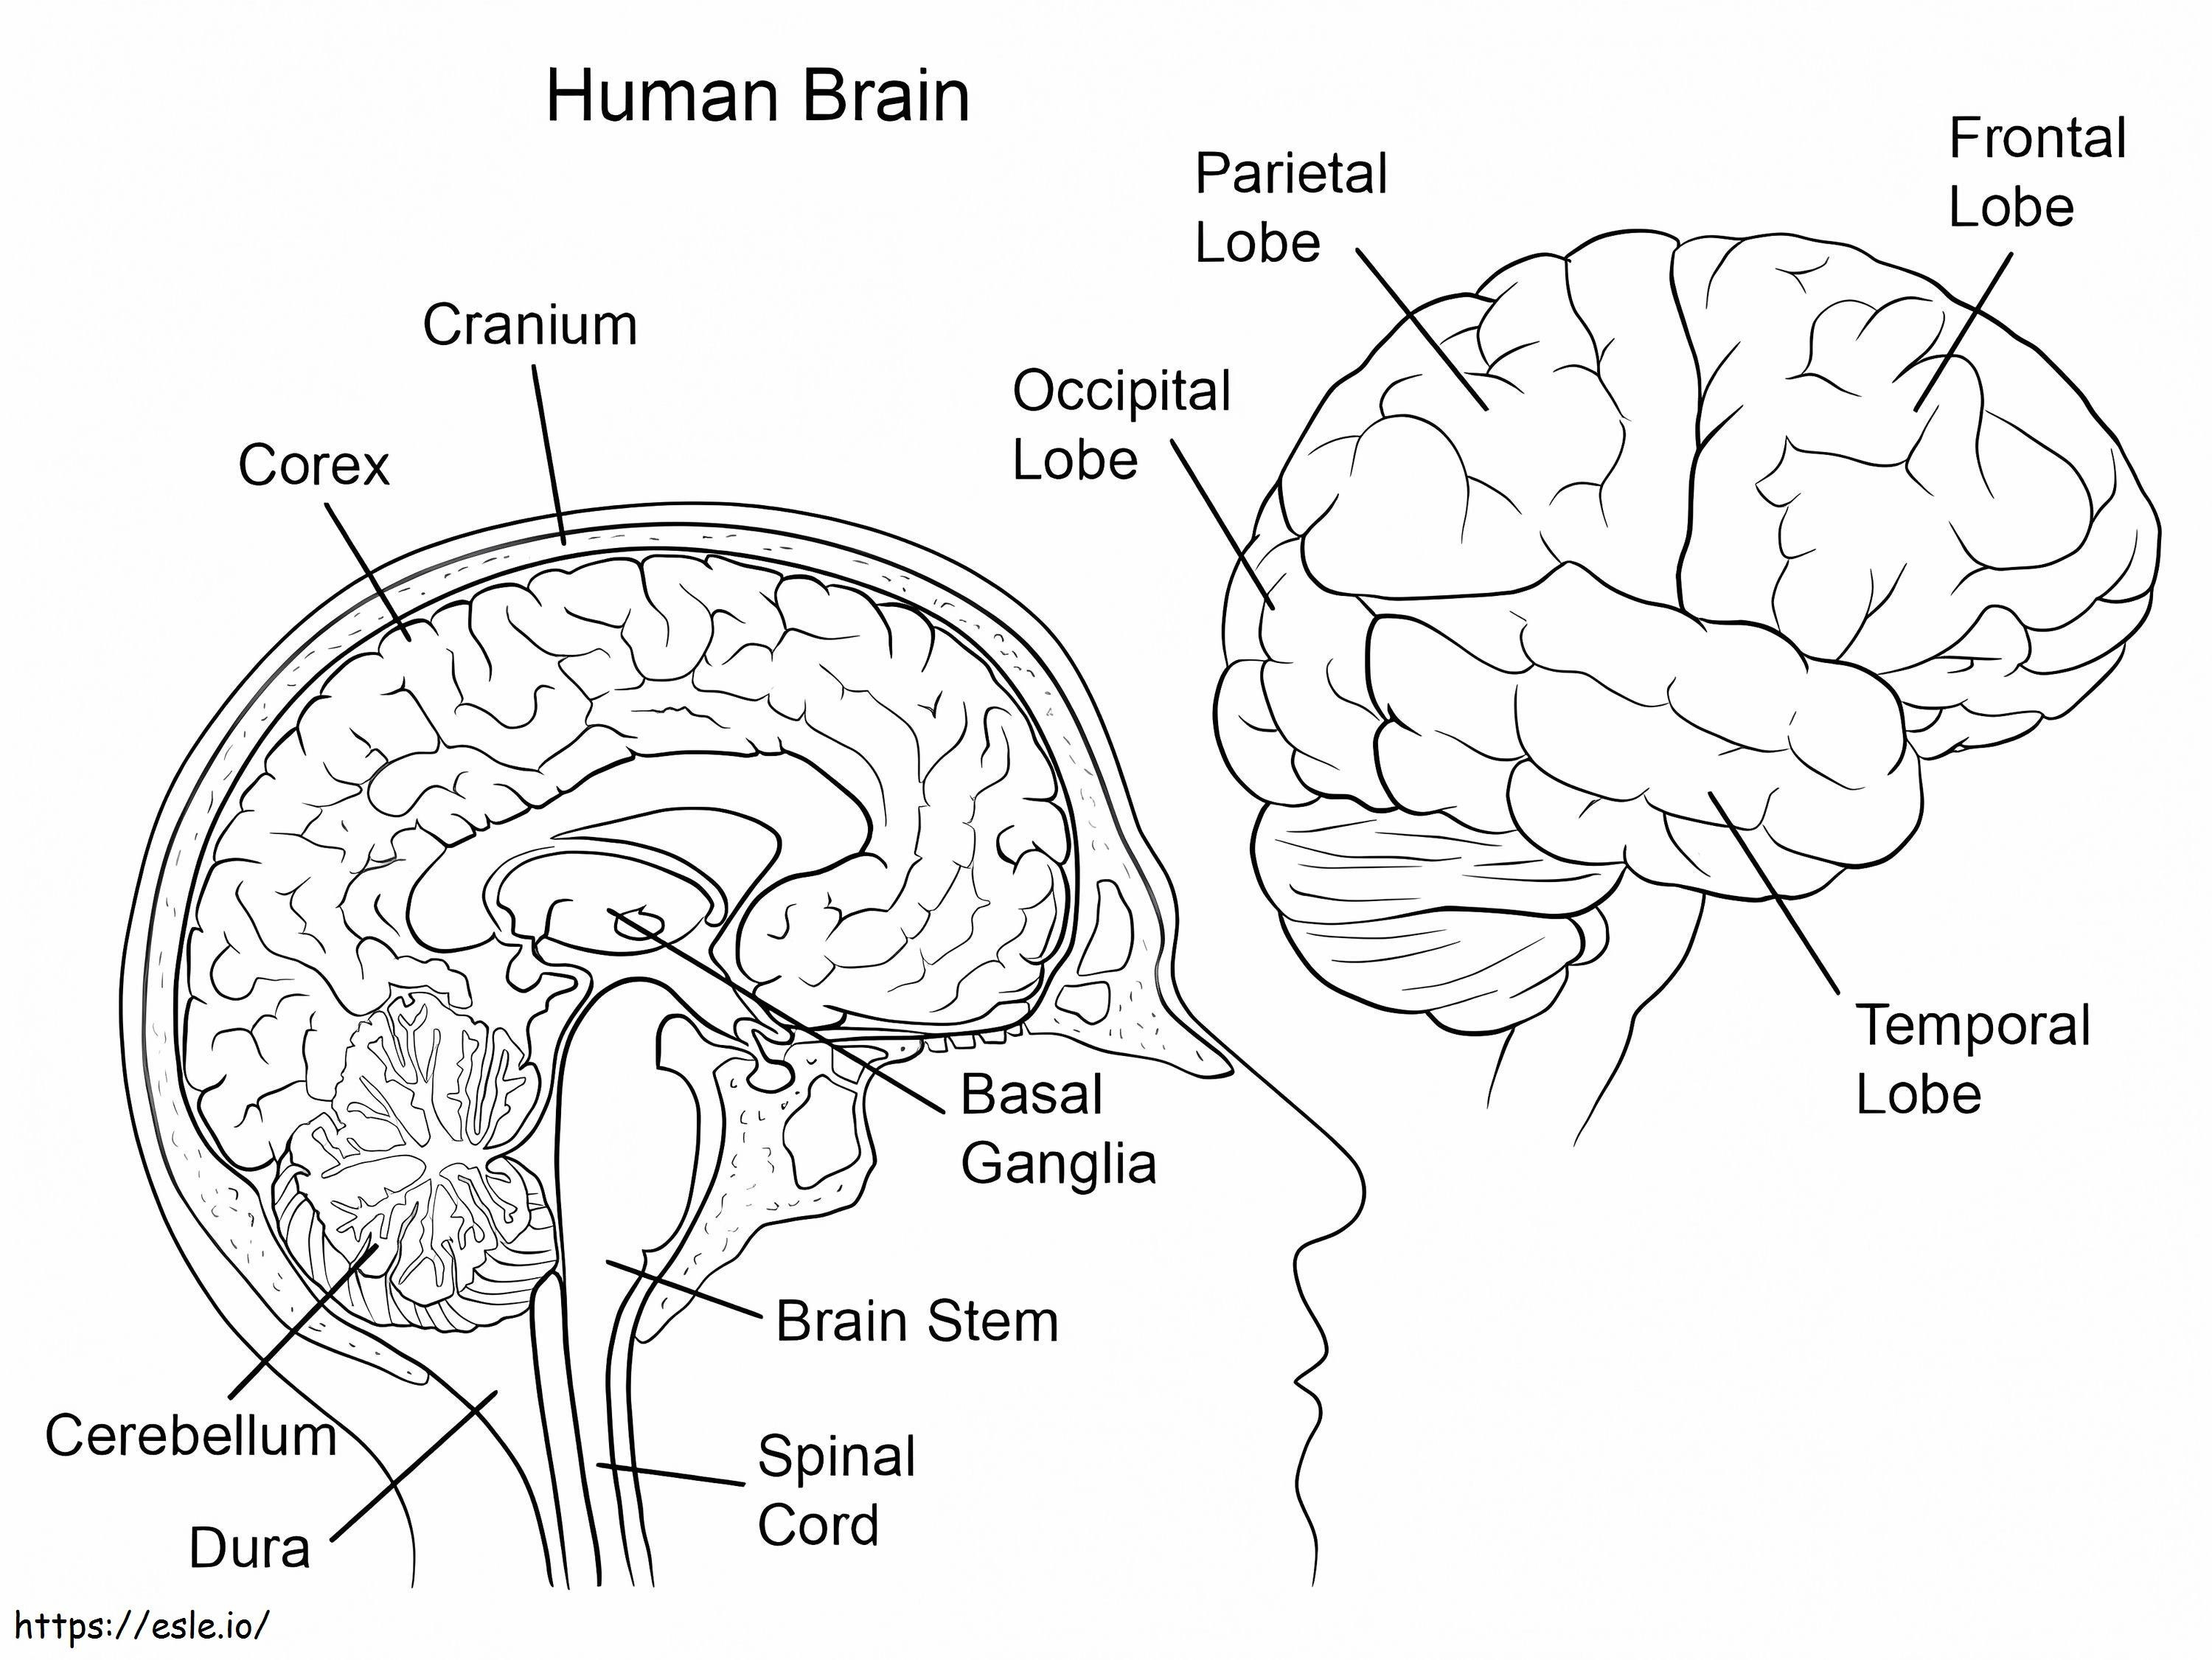 Human Brain Anatomy coloring page